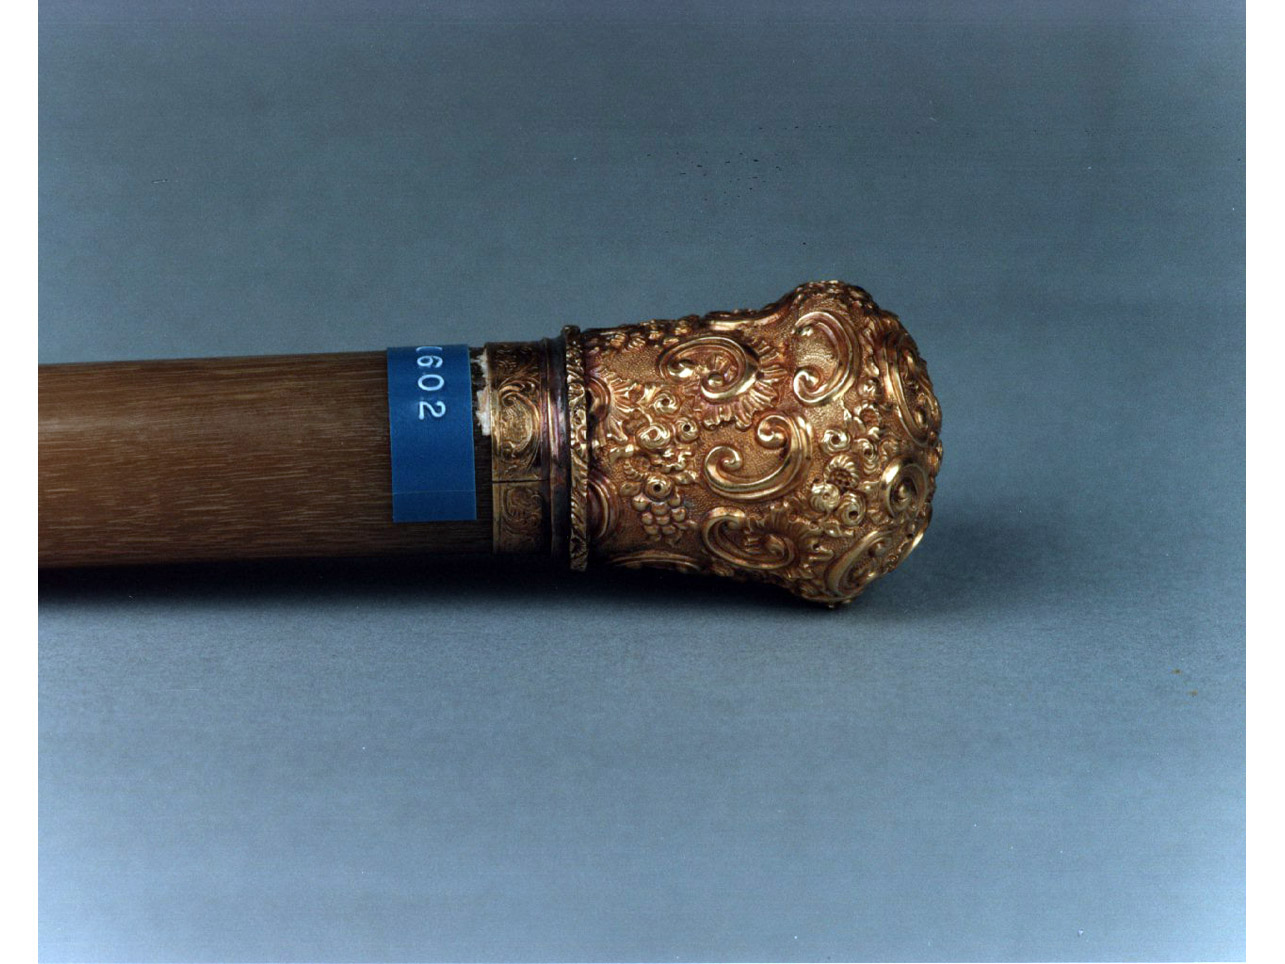 motivi decorativi floreali (bastone) - bottega inglese (seconda metà sec. XVIII)